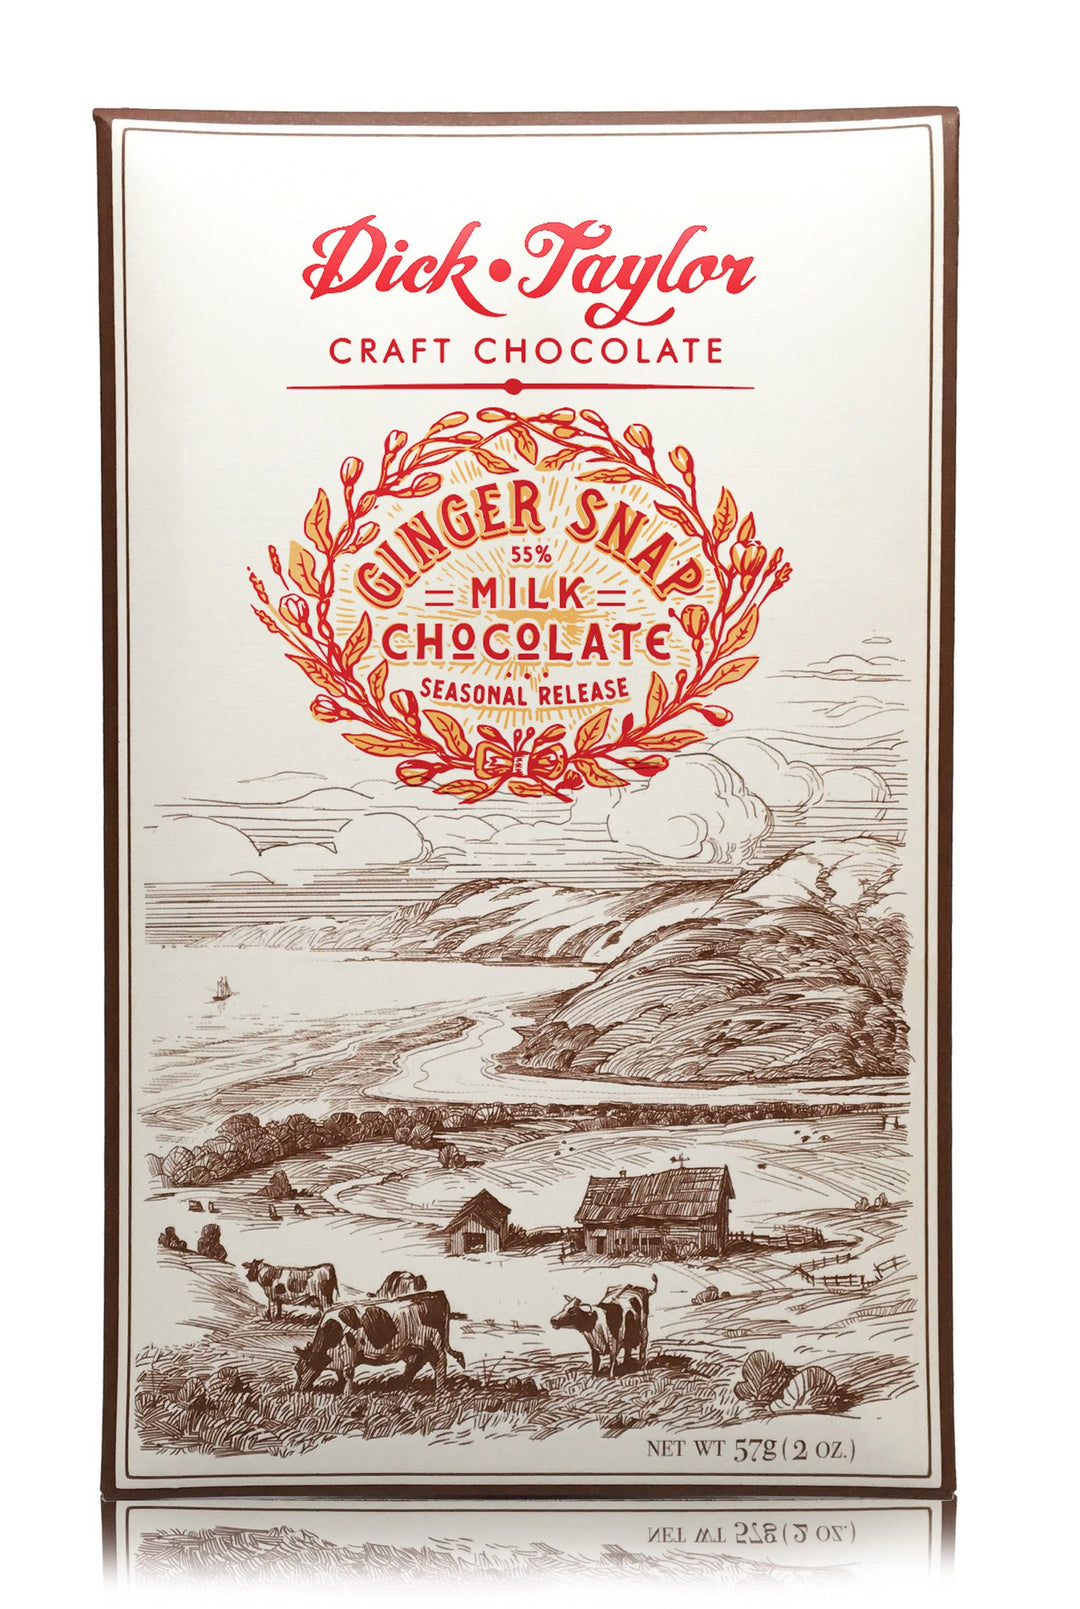 Dick Taylor 55% Ginger Snap Milk Chocolate